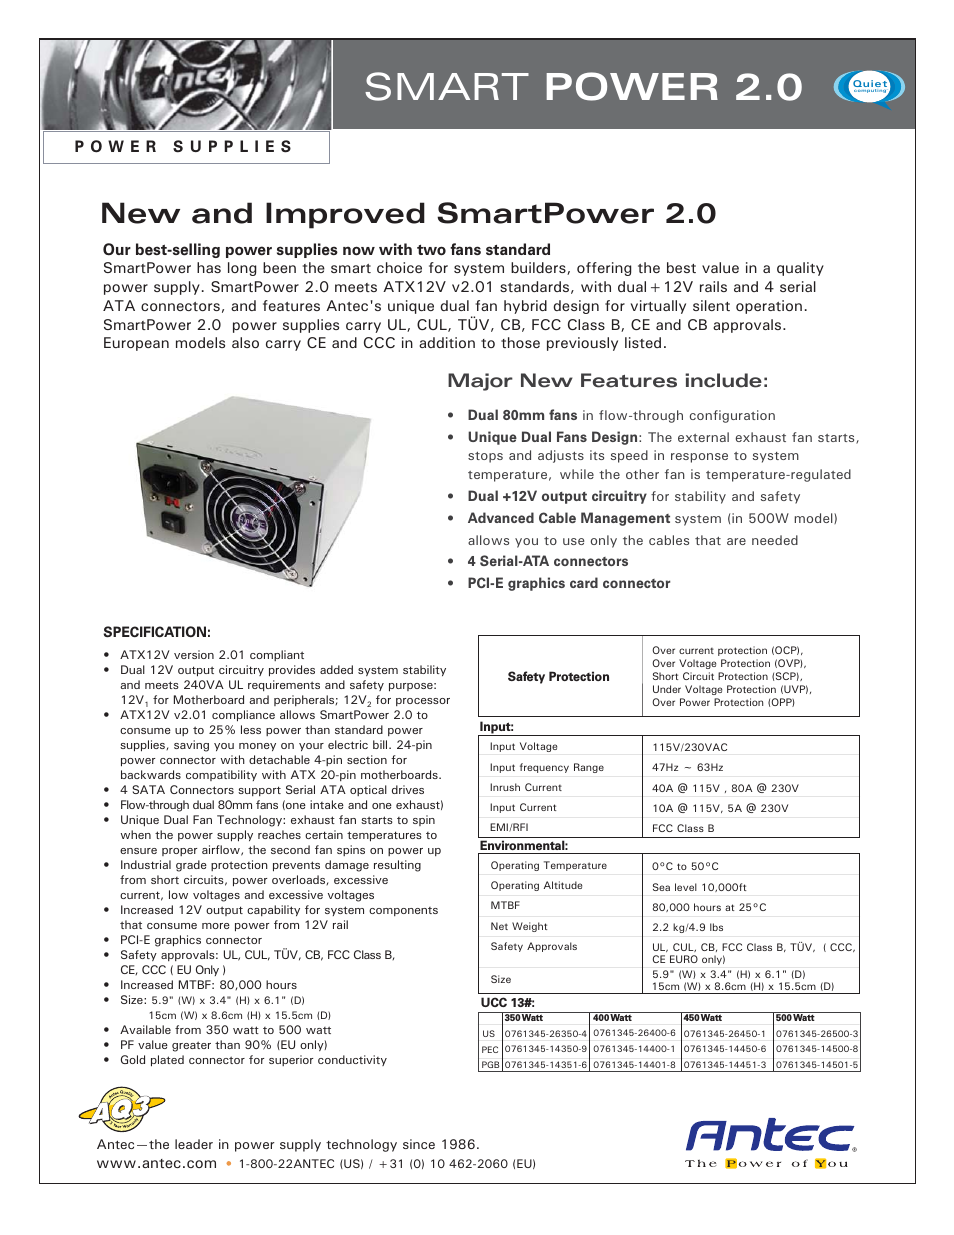 SmartPower 4 Serial-ATA